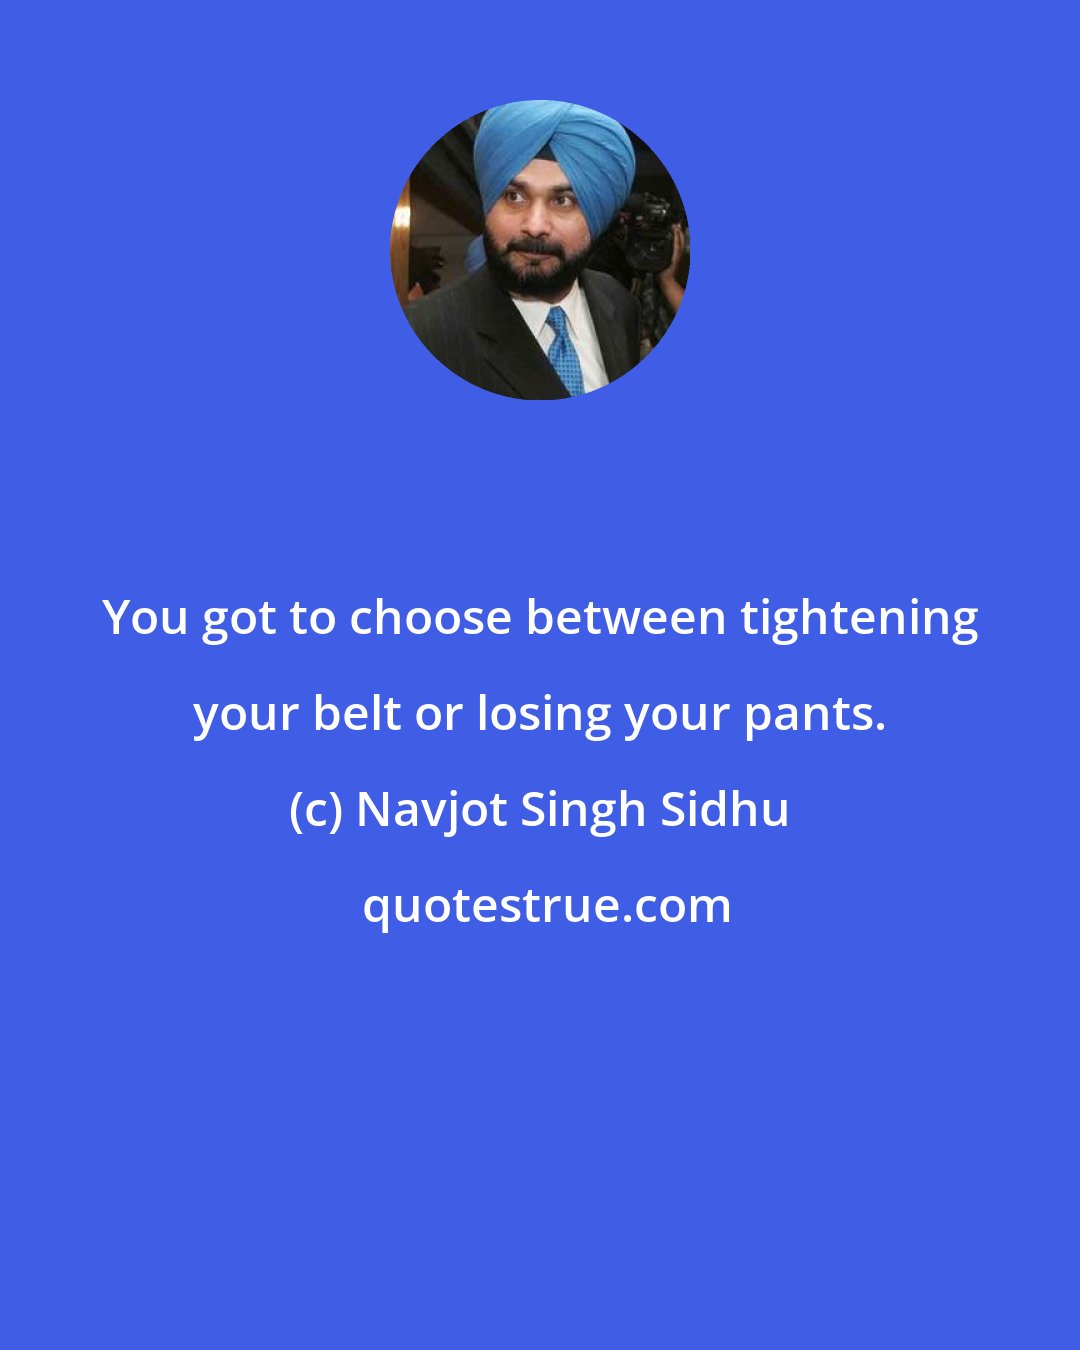 Navjot Singh Sidhu: You got to choose between tightening your belt or losing your pants.